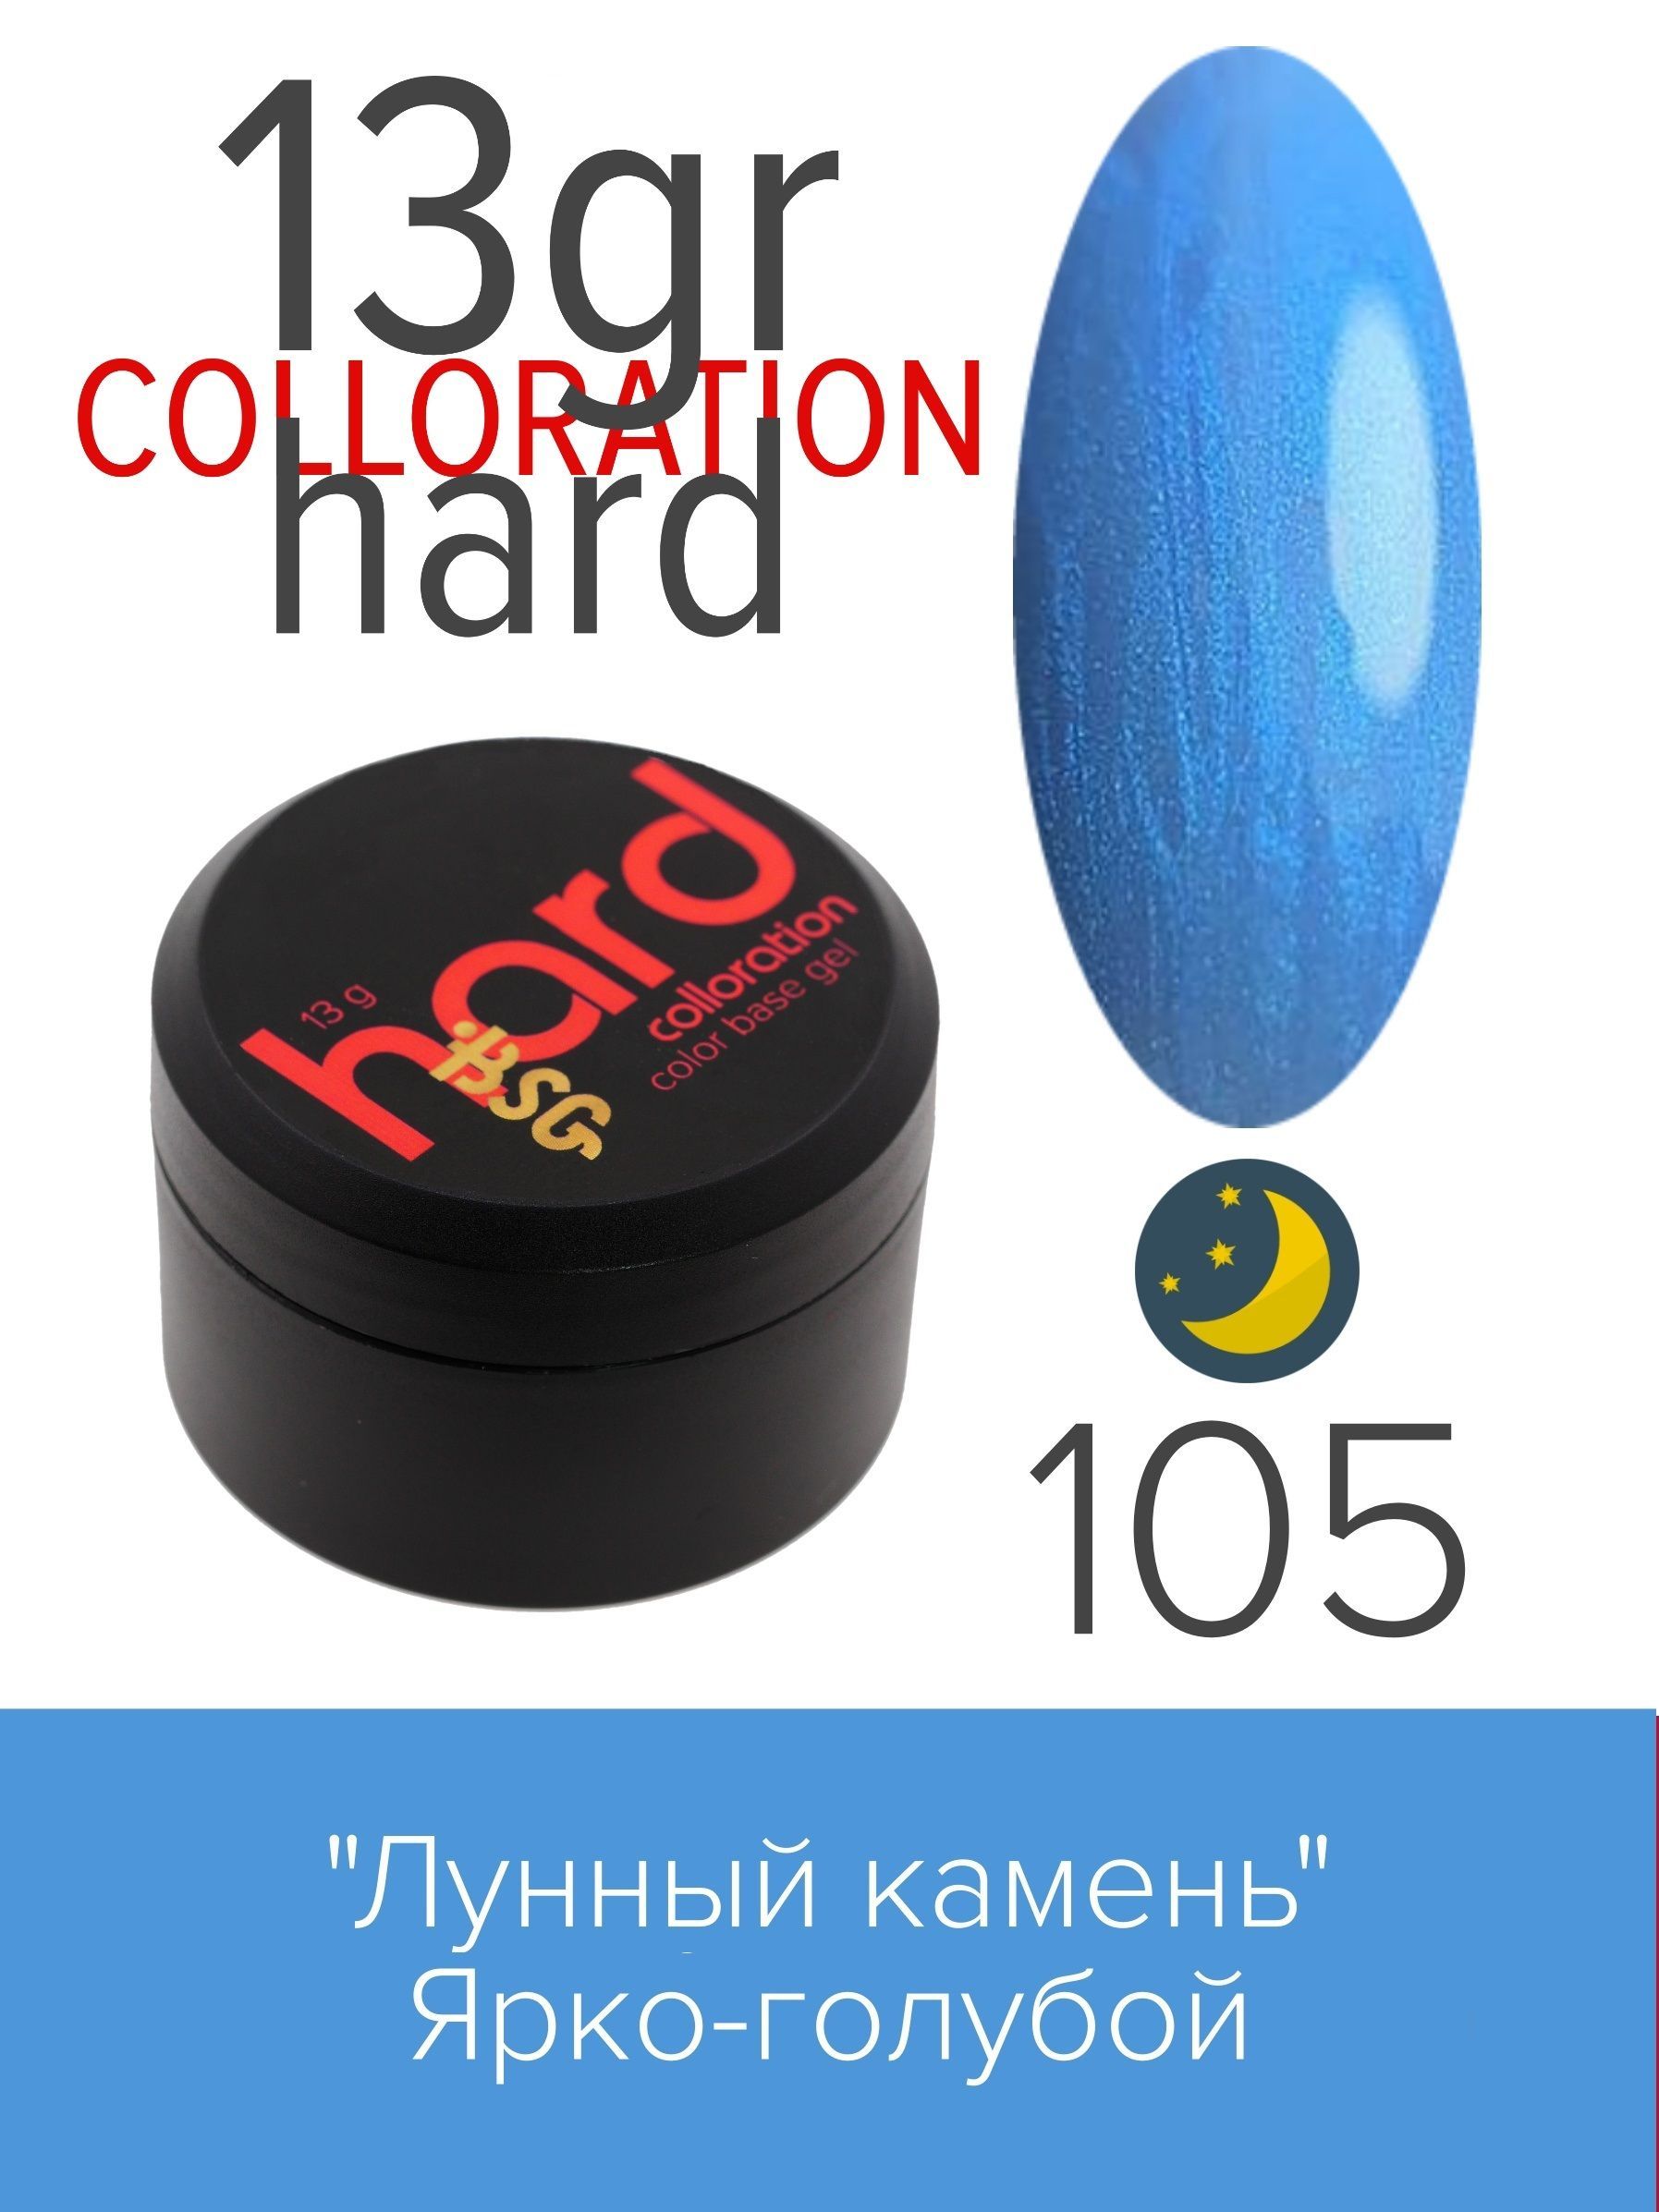 База BSG Colloration Hard цветная жесткая №105 комплект ных жестких баз bsg colloration hard лунный камень